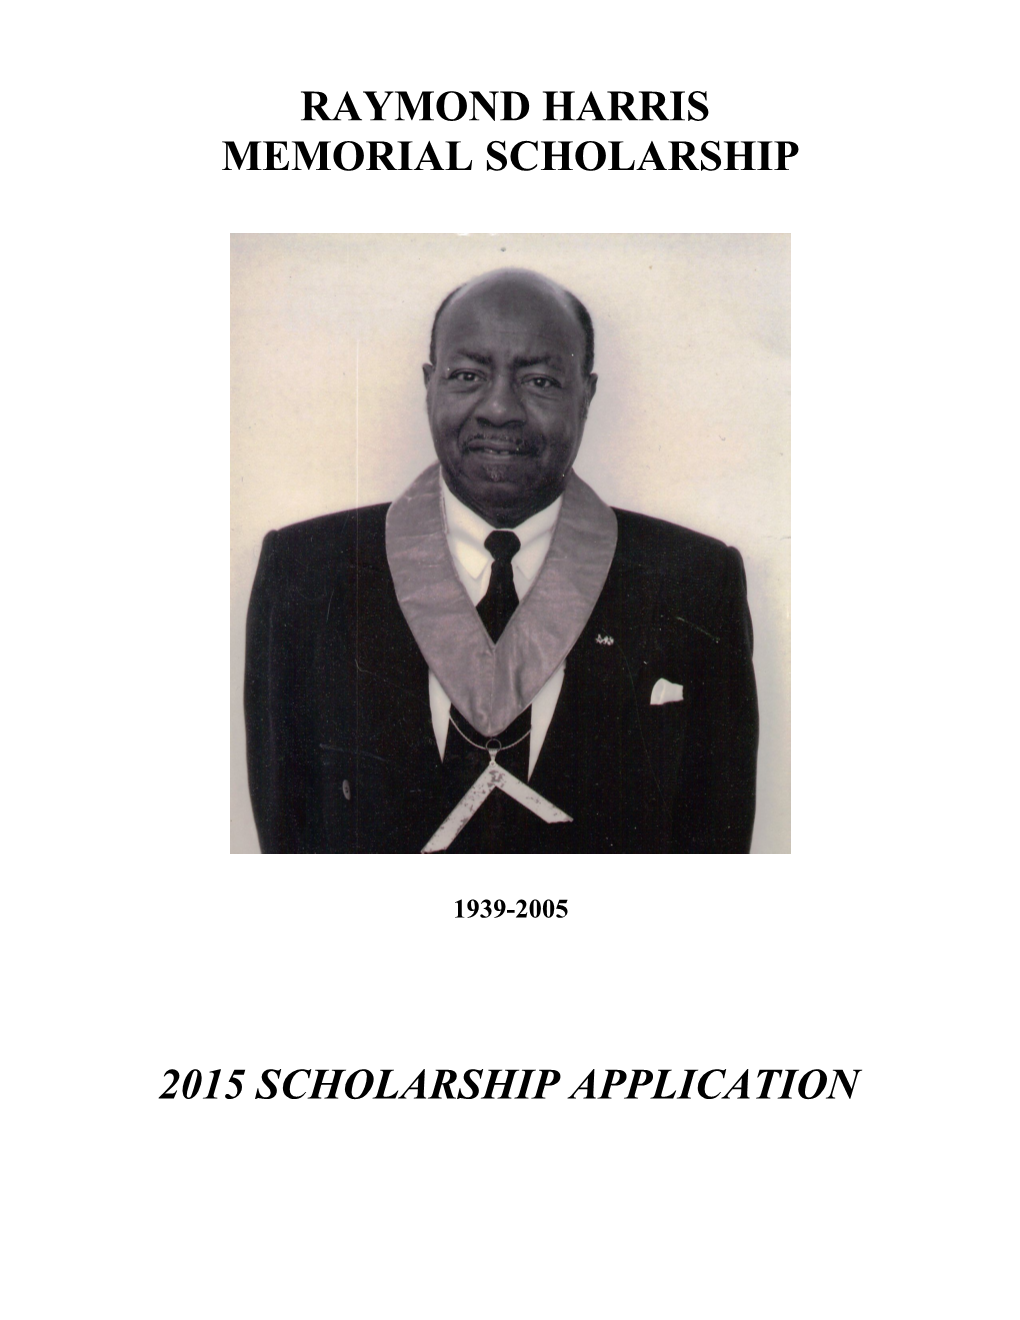 Memorial Scholarship